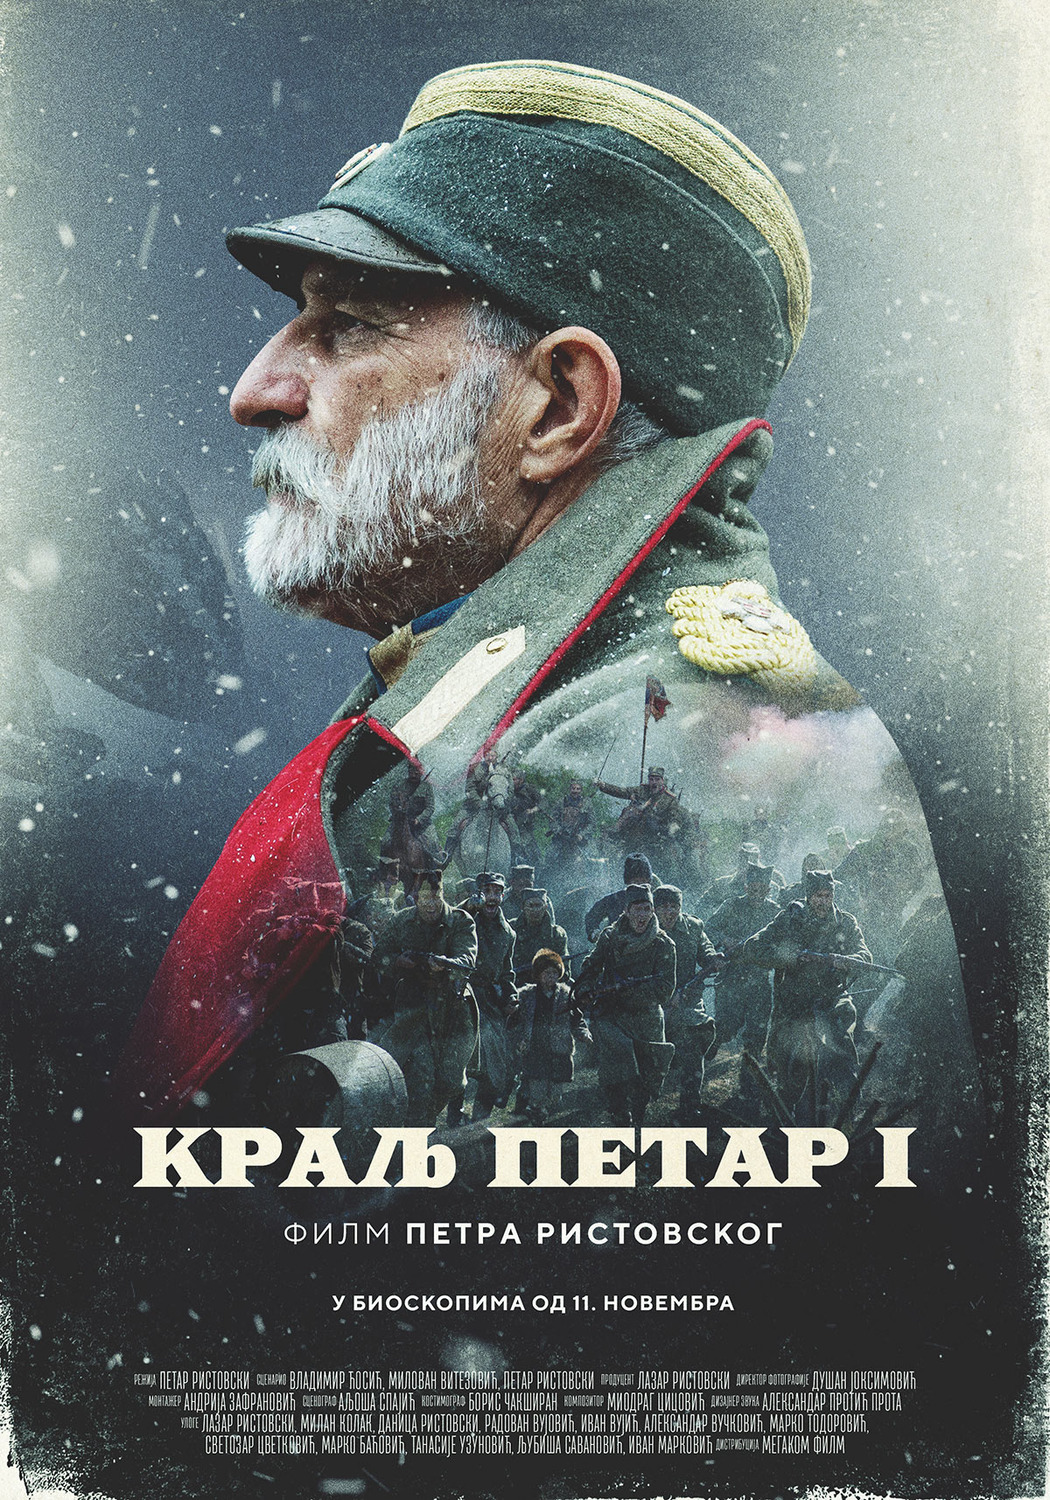 Extra Large Movie Poster Image for Kralj Petar I 